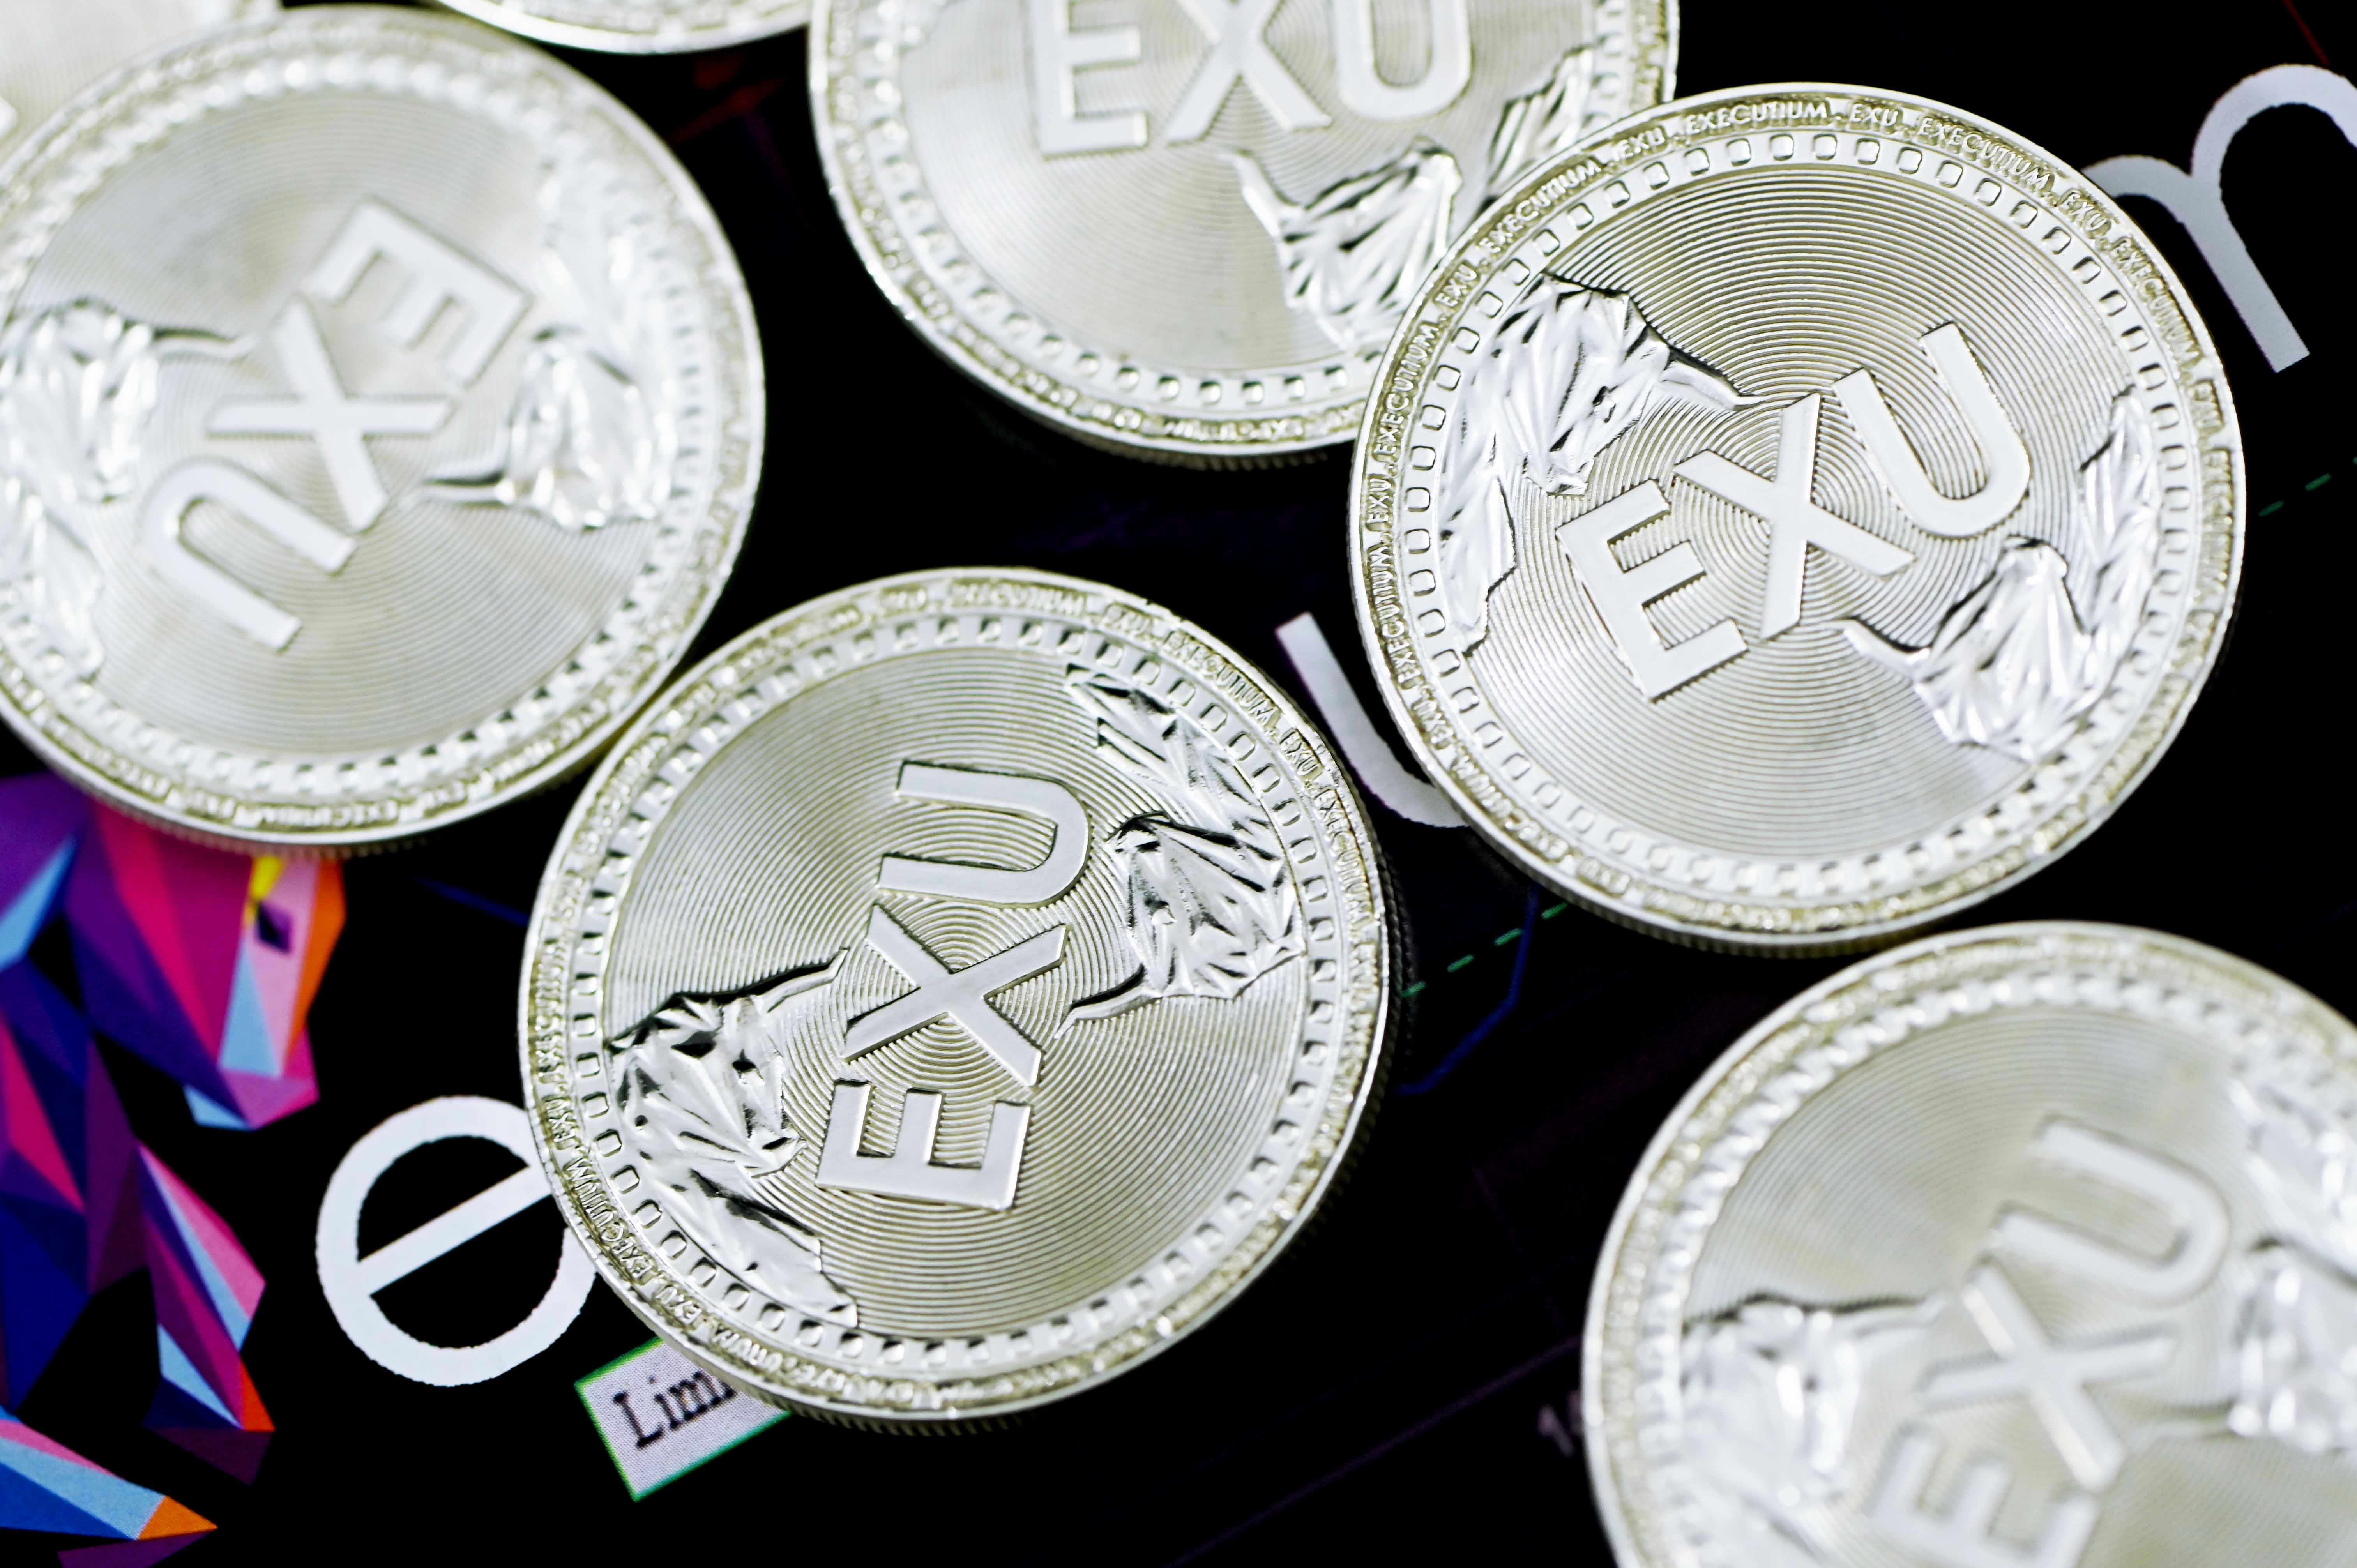 Executium coins on top of Executium board